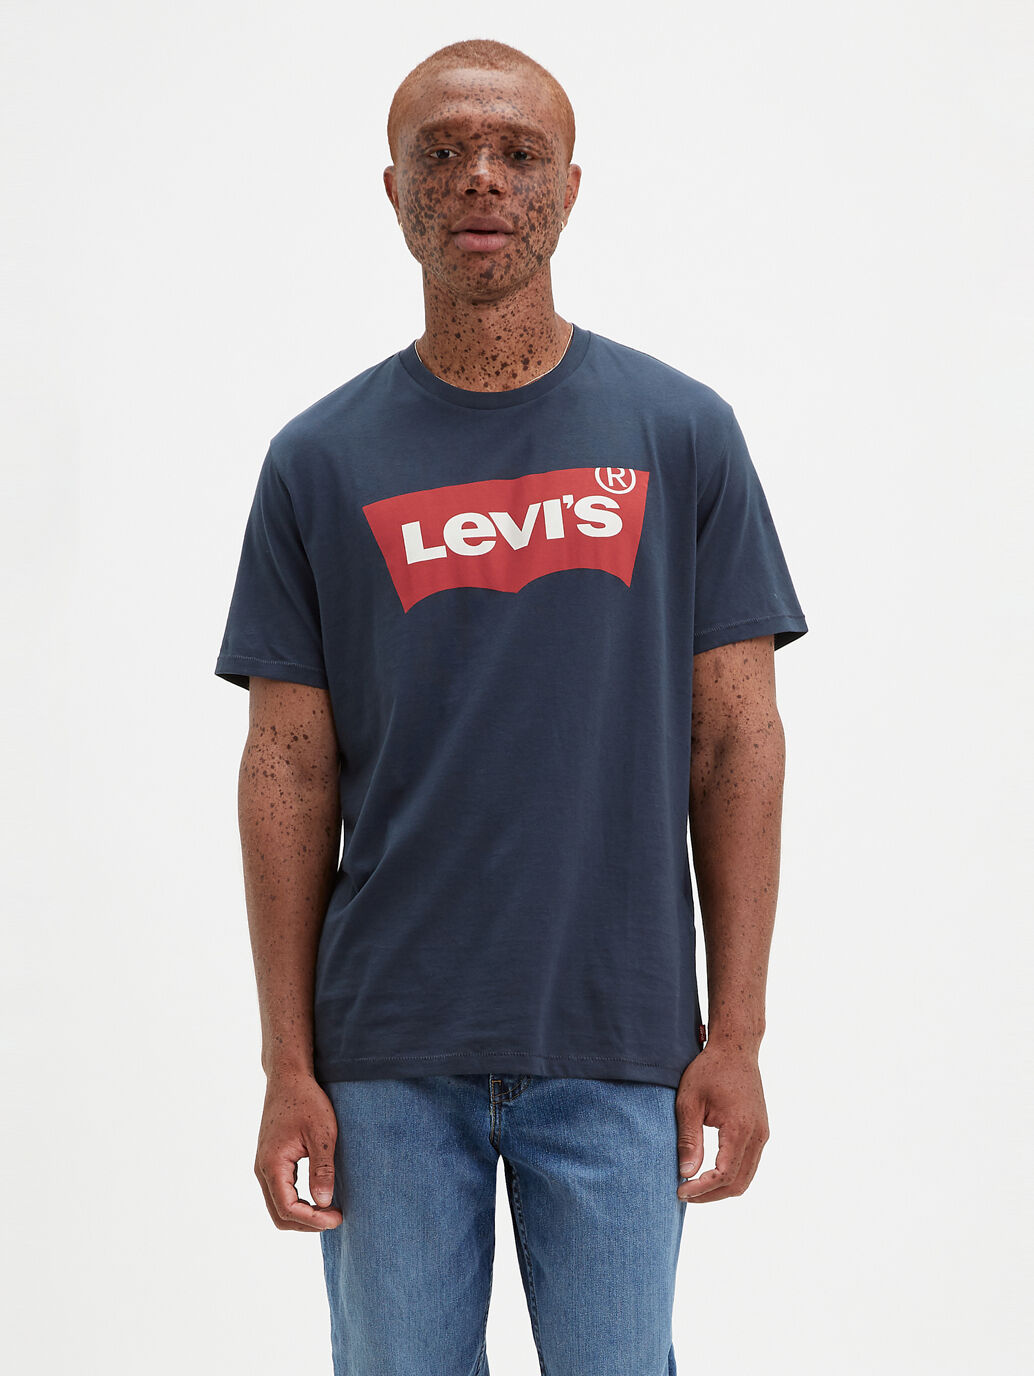 levis shirt cost